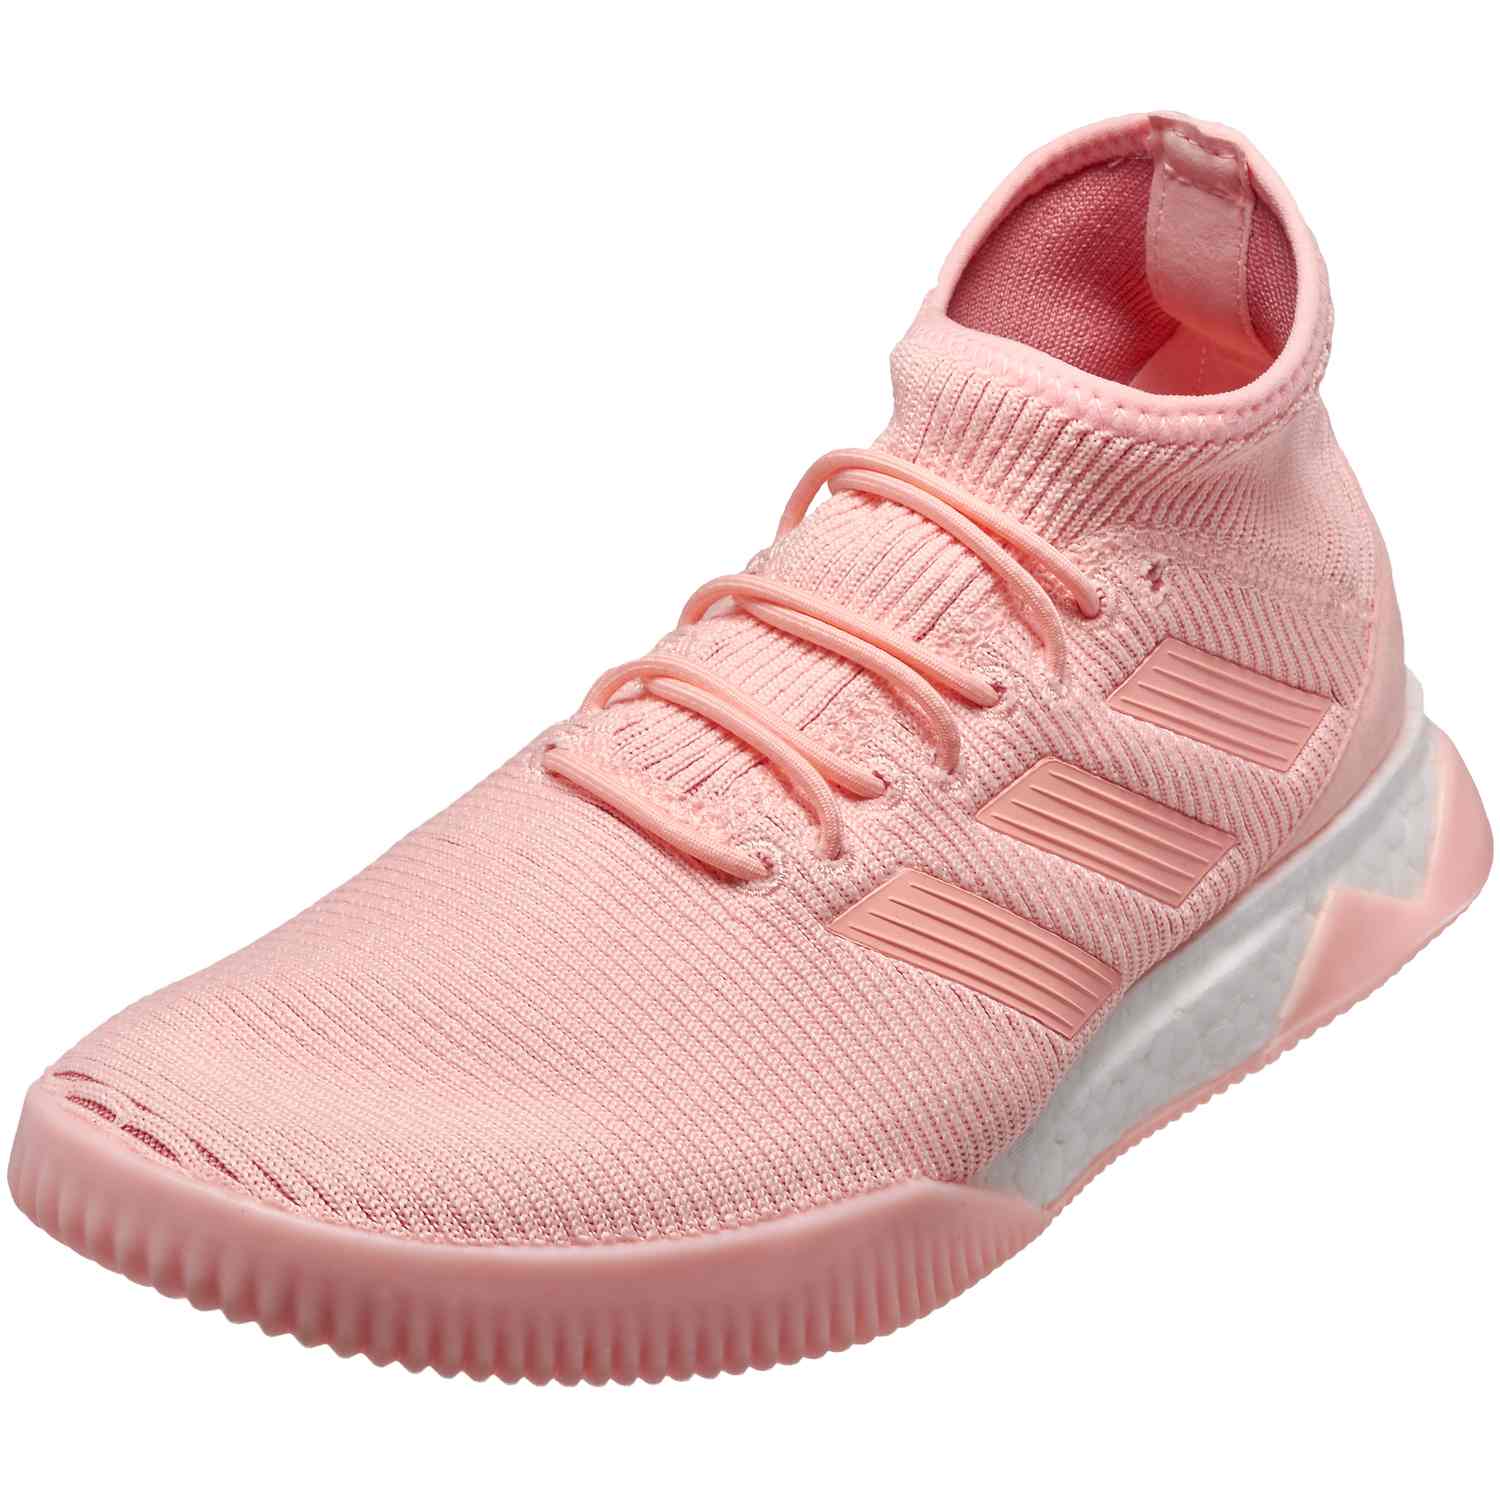 adidas predator pink trainers